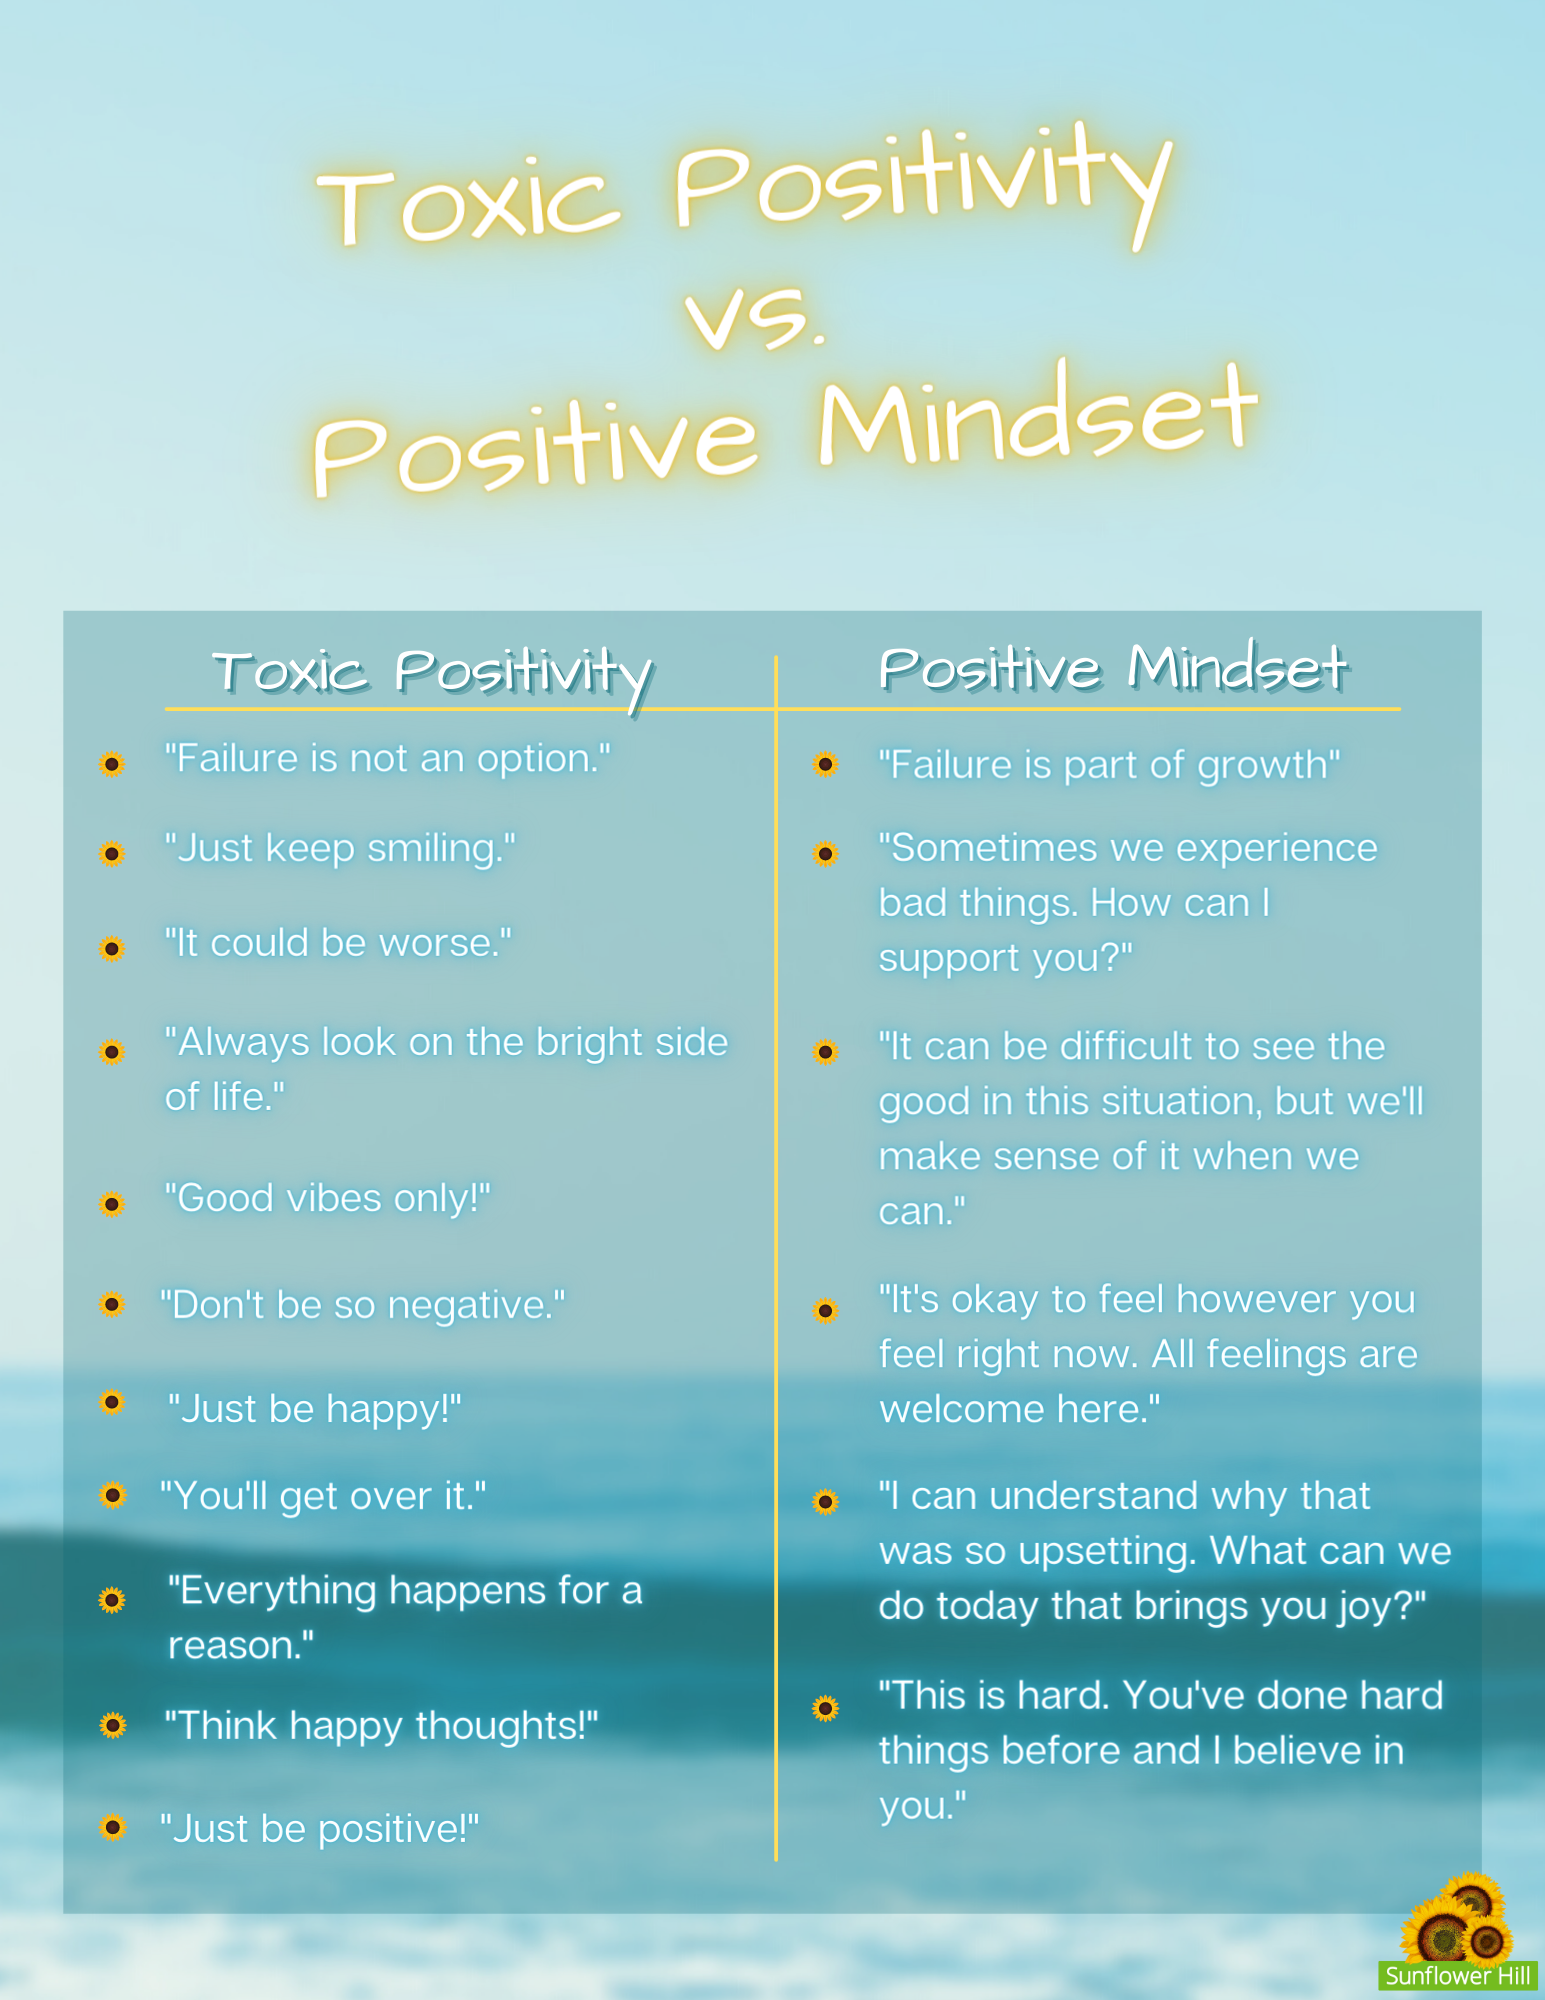 Toxic positivity versus positive mindset suggestions